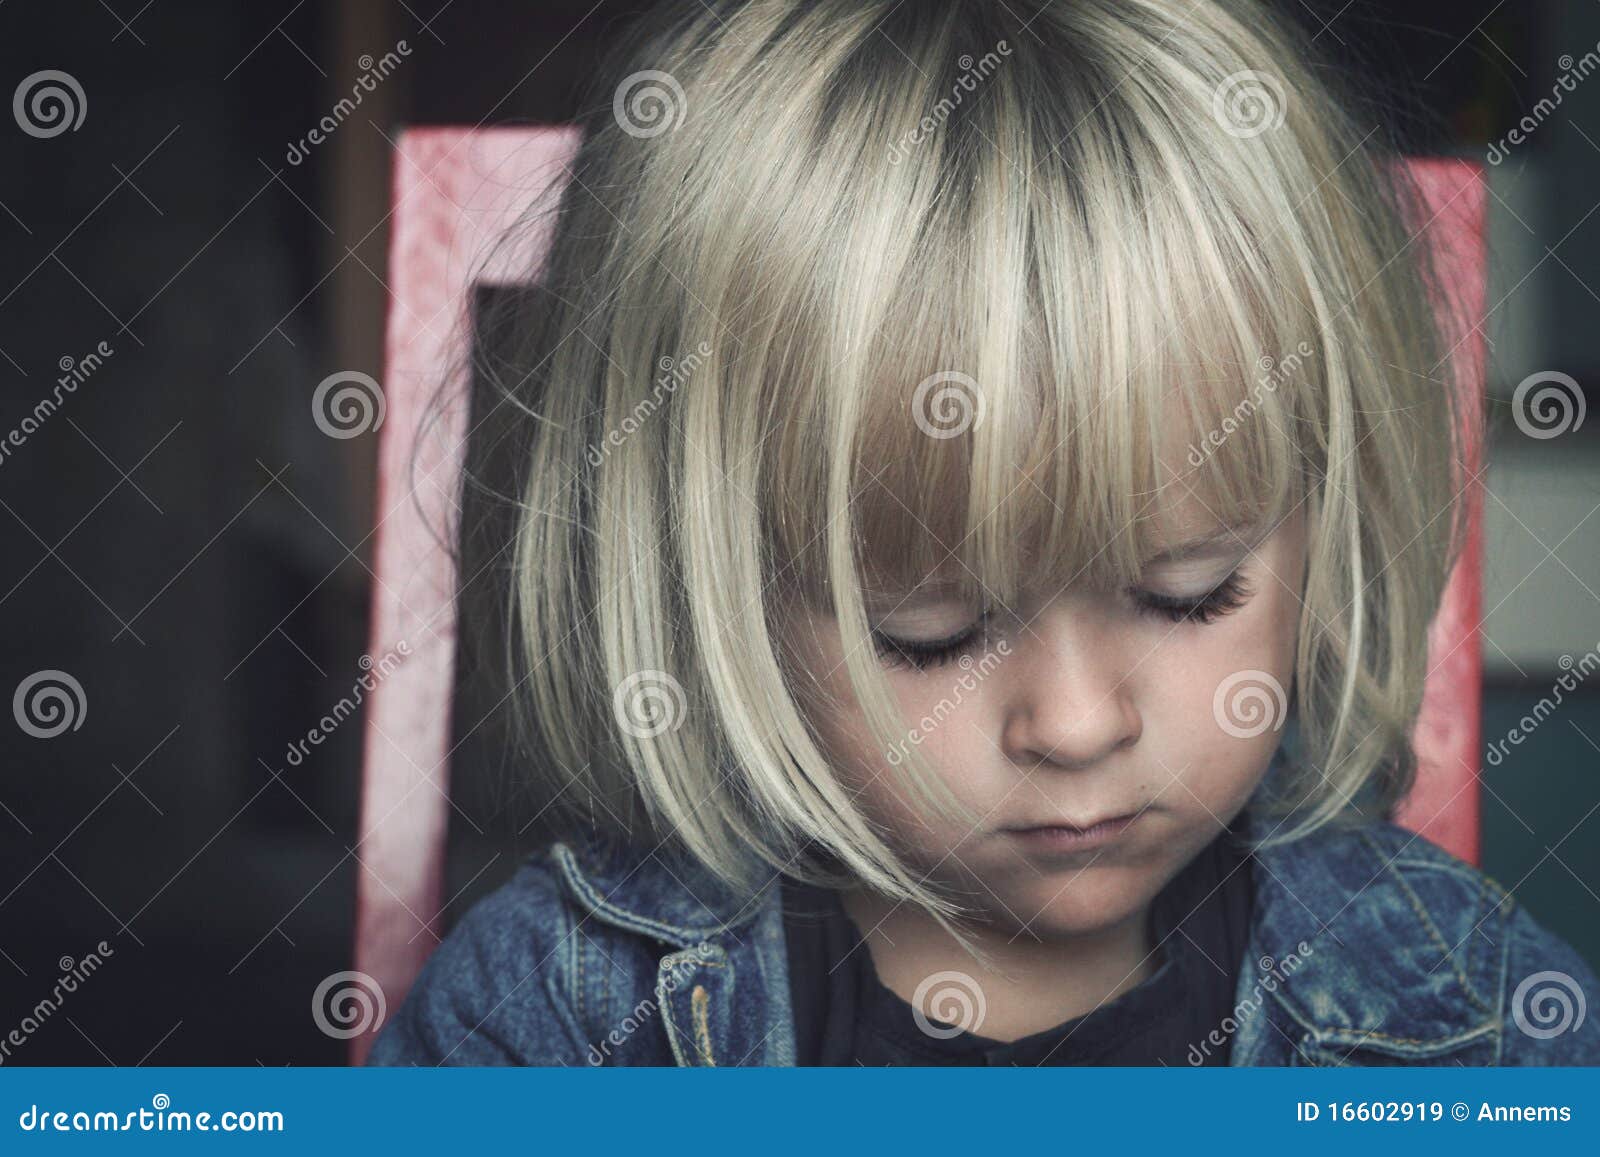 sad little girl